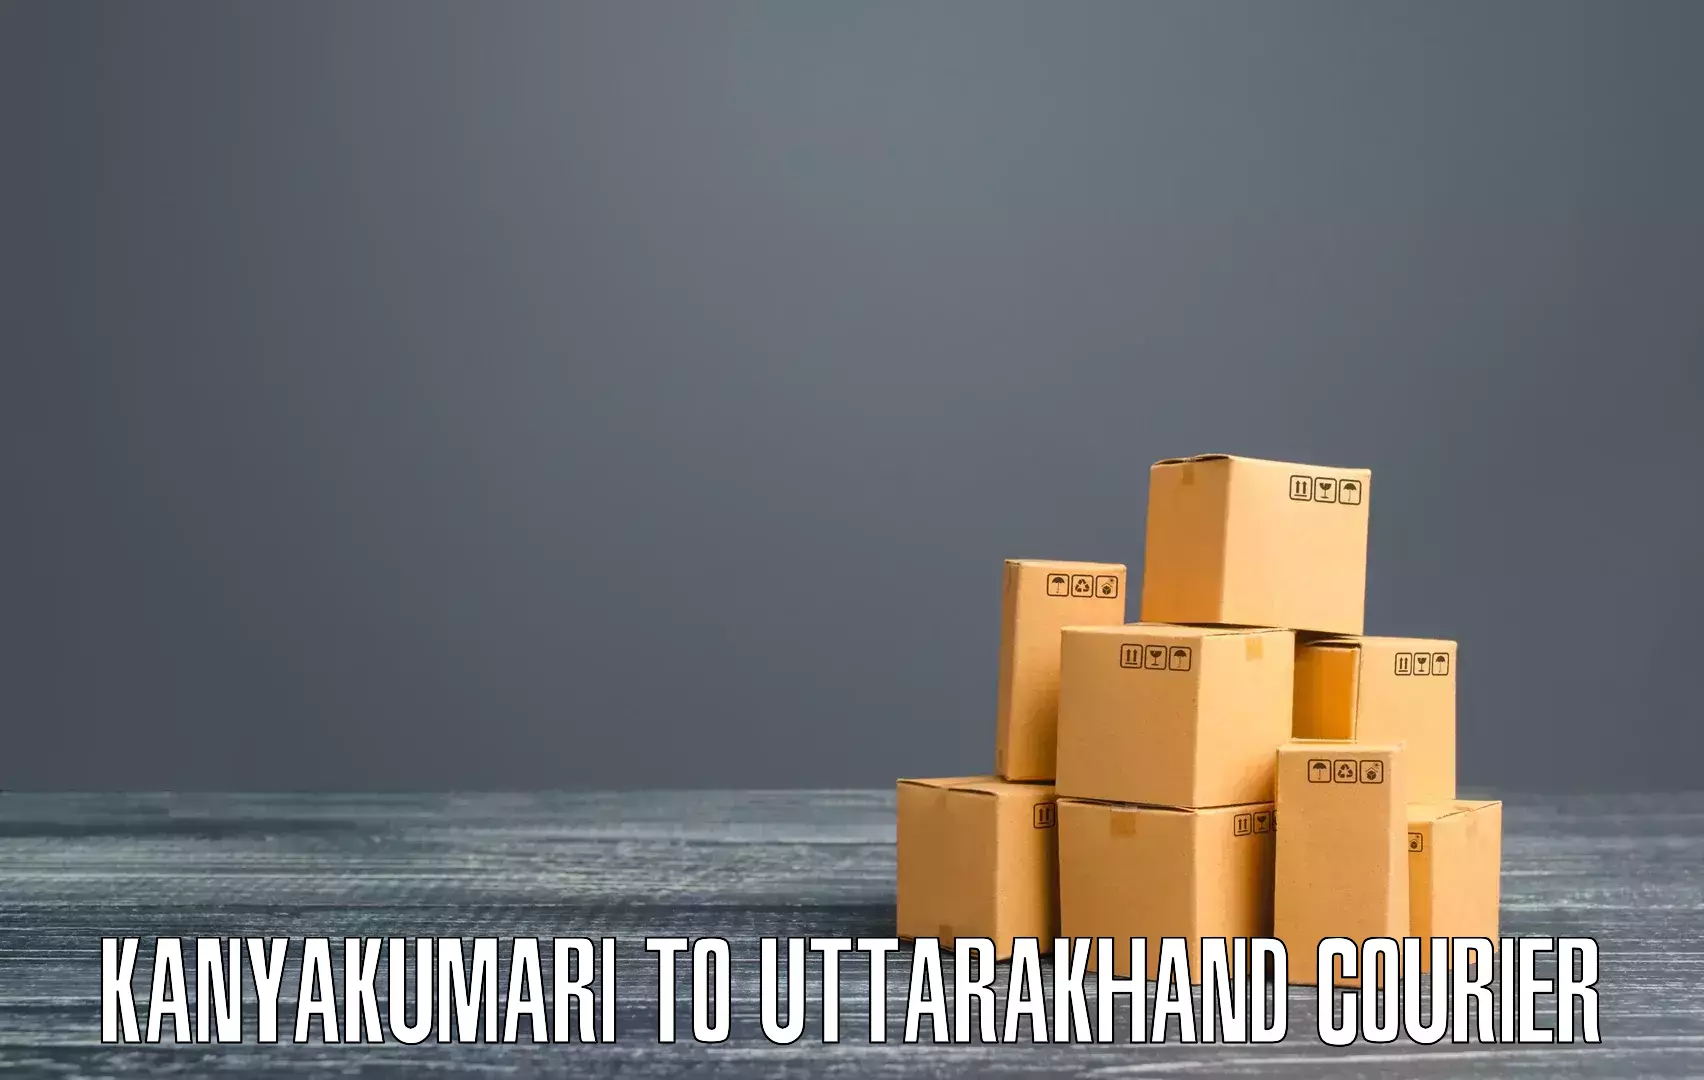 Express delivery capabilities Kanyakumari to Karnaprayag